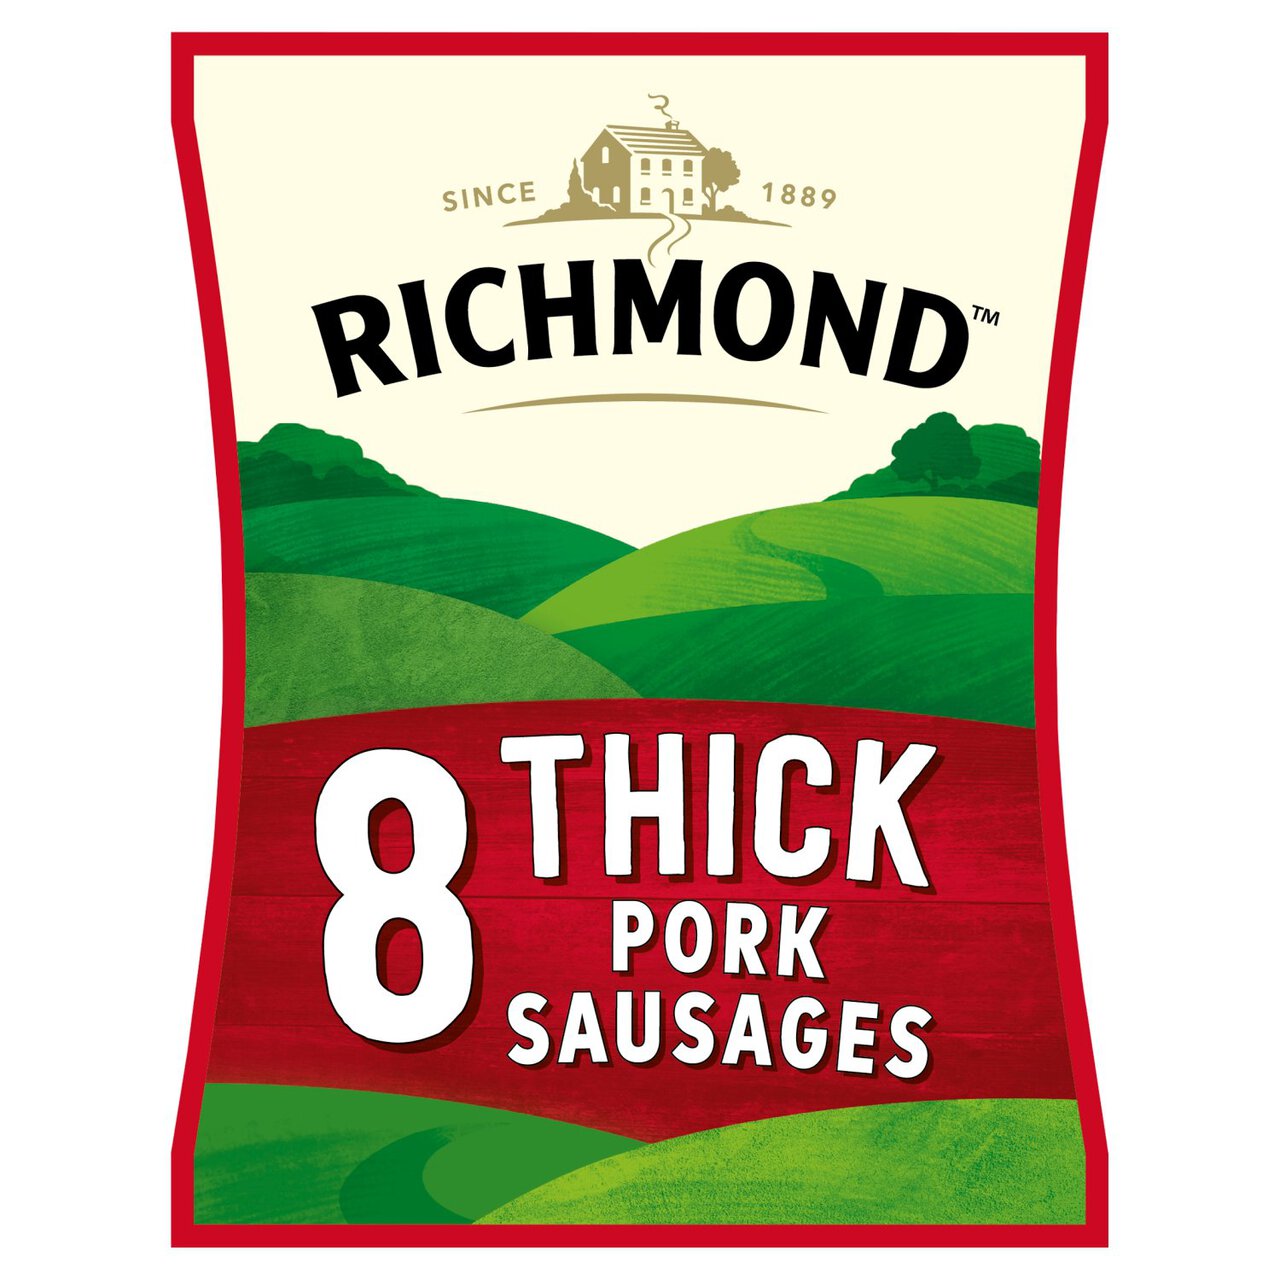 Richmond 8 Thick Pork Sausages 410g